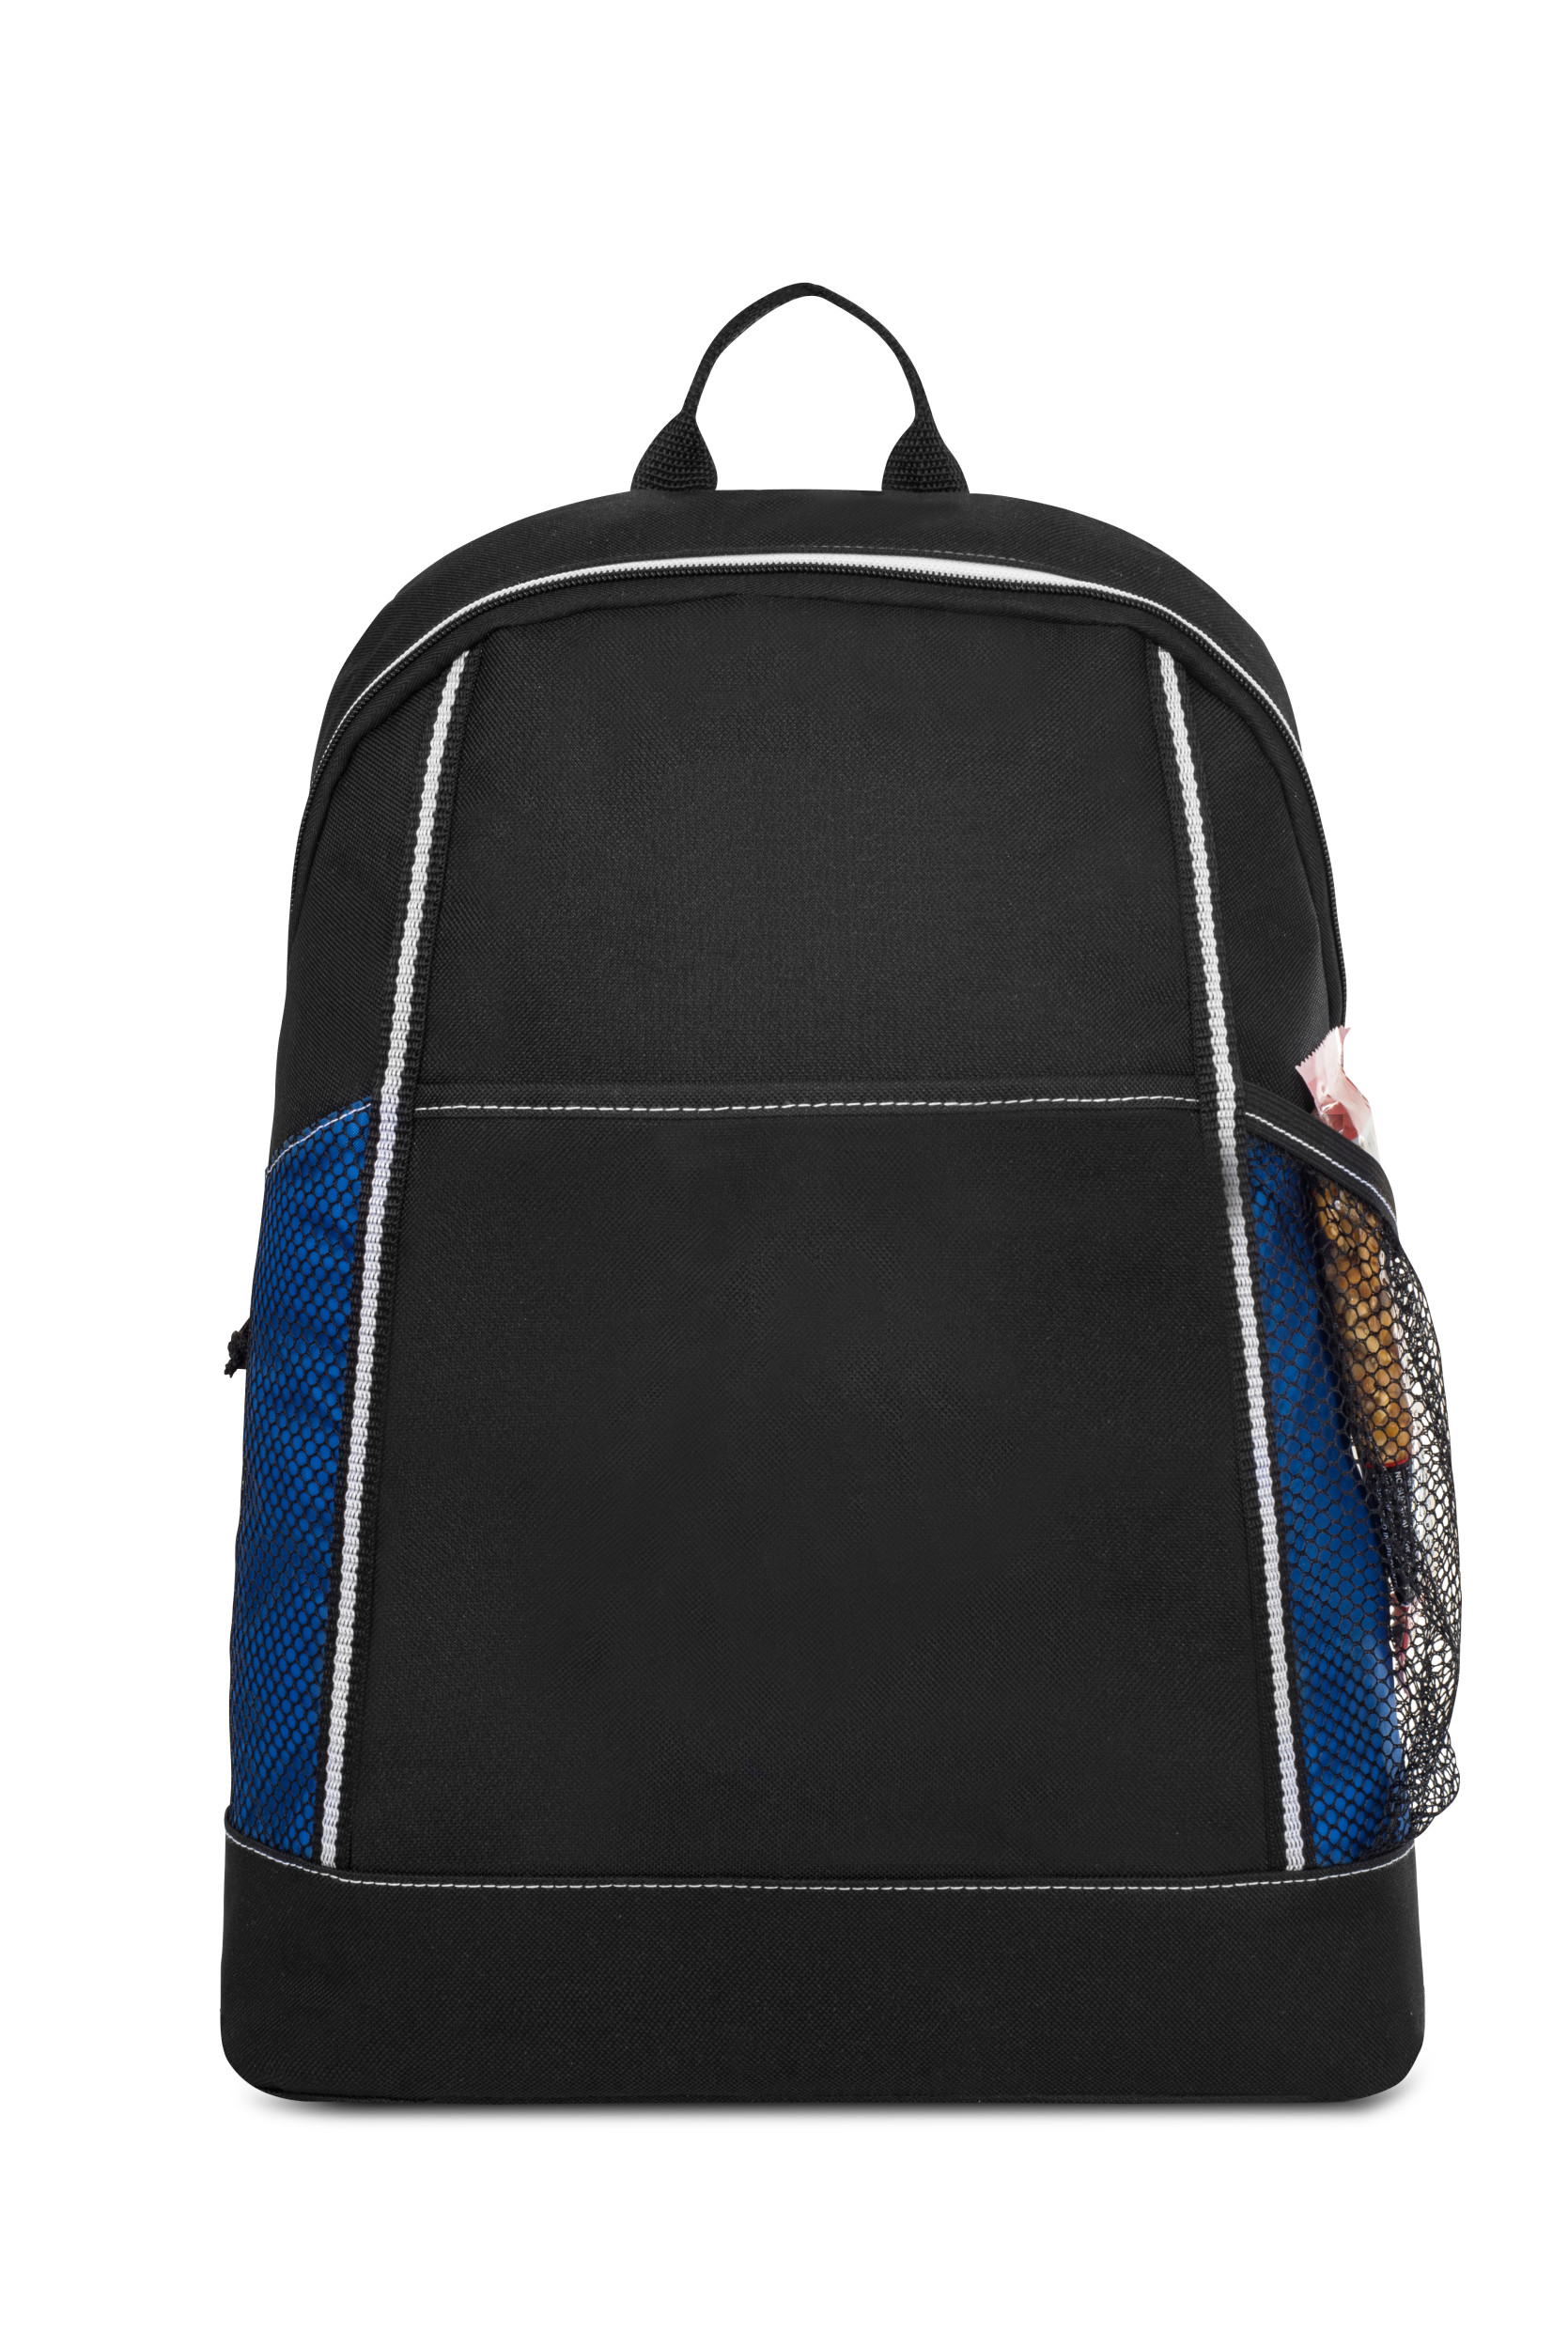 Gemline 5245 - Champion Backpack